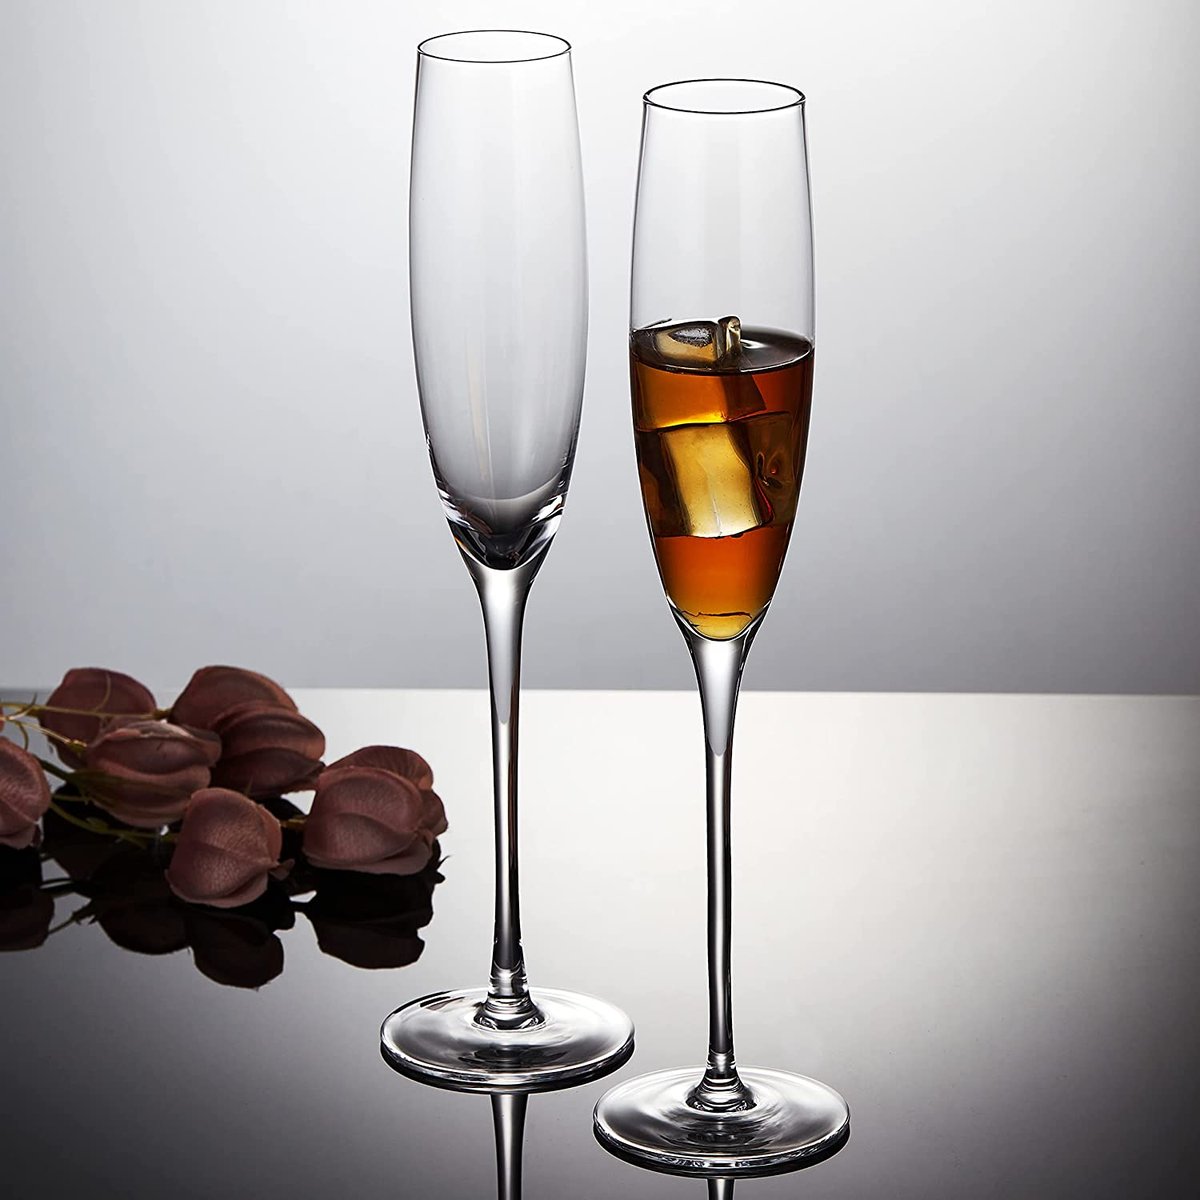 Berkware Premium Crystal Champagne Flutes - 5.5 oz, Set of 2